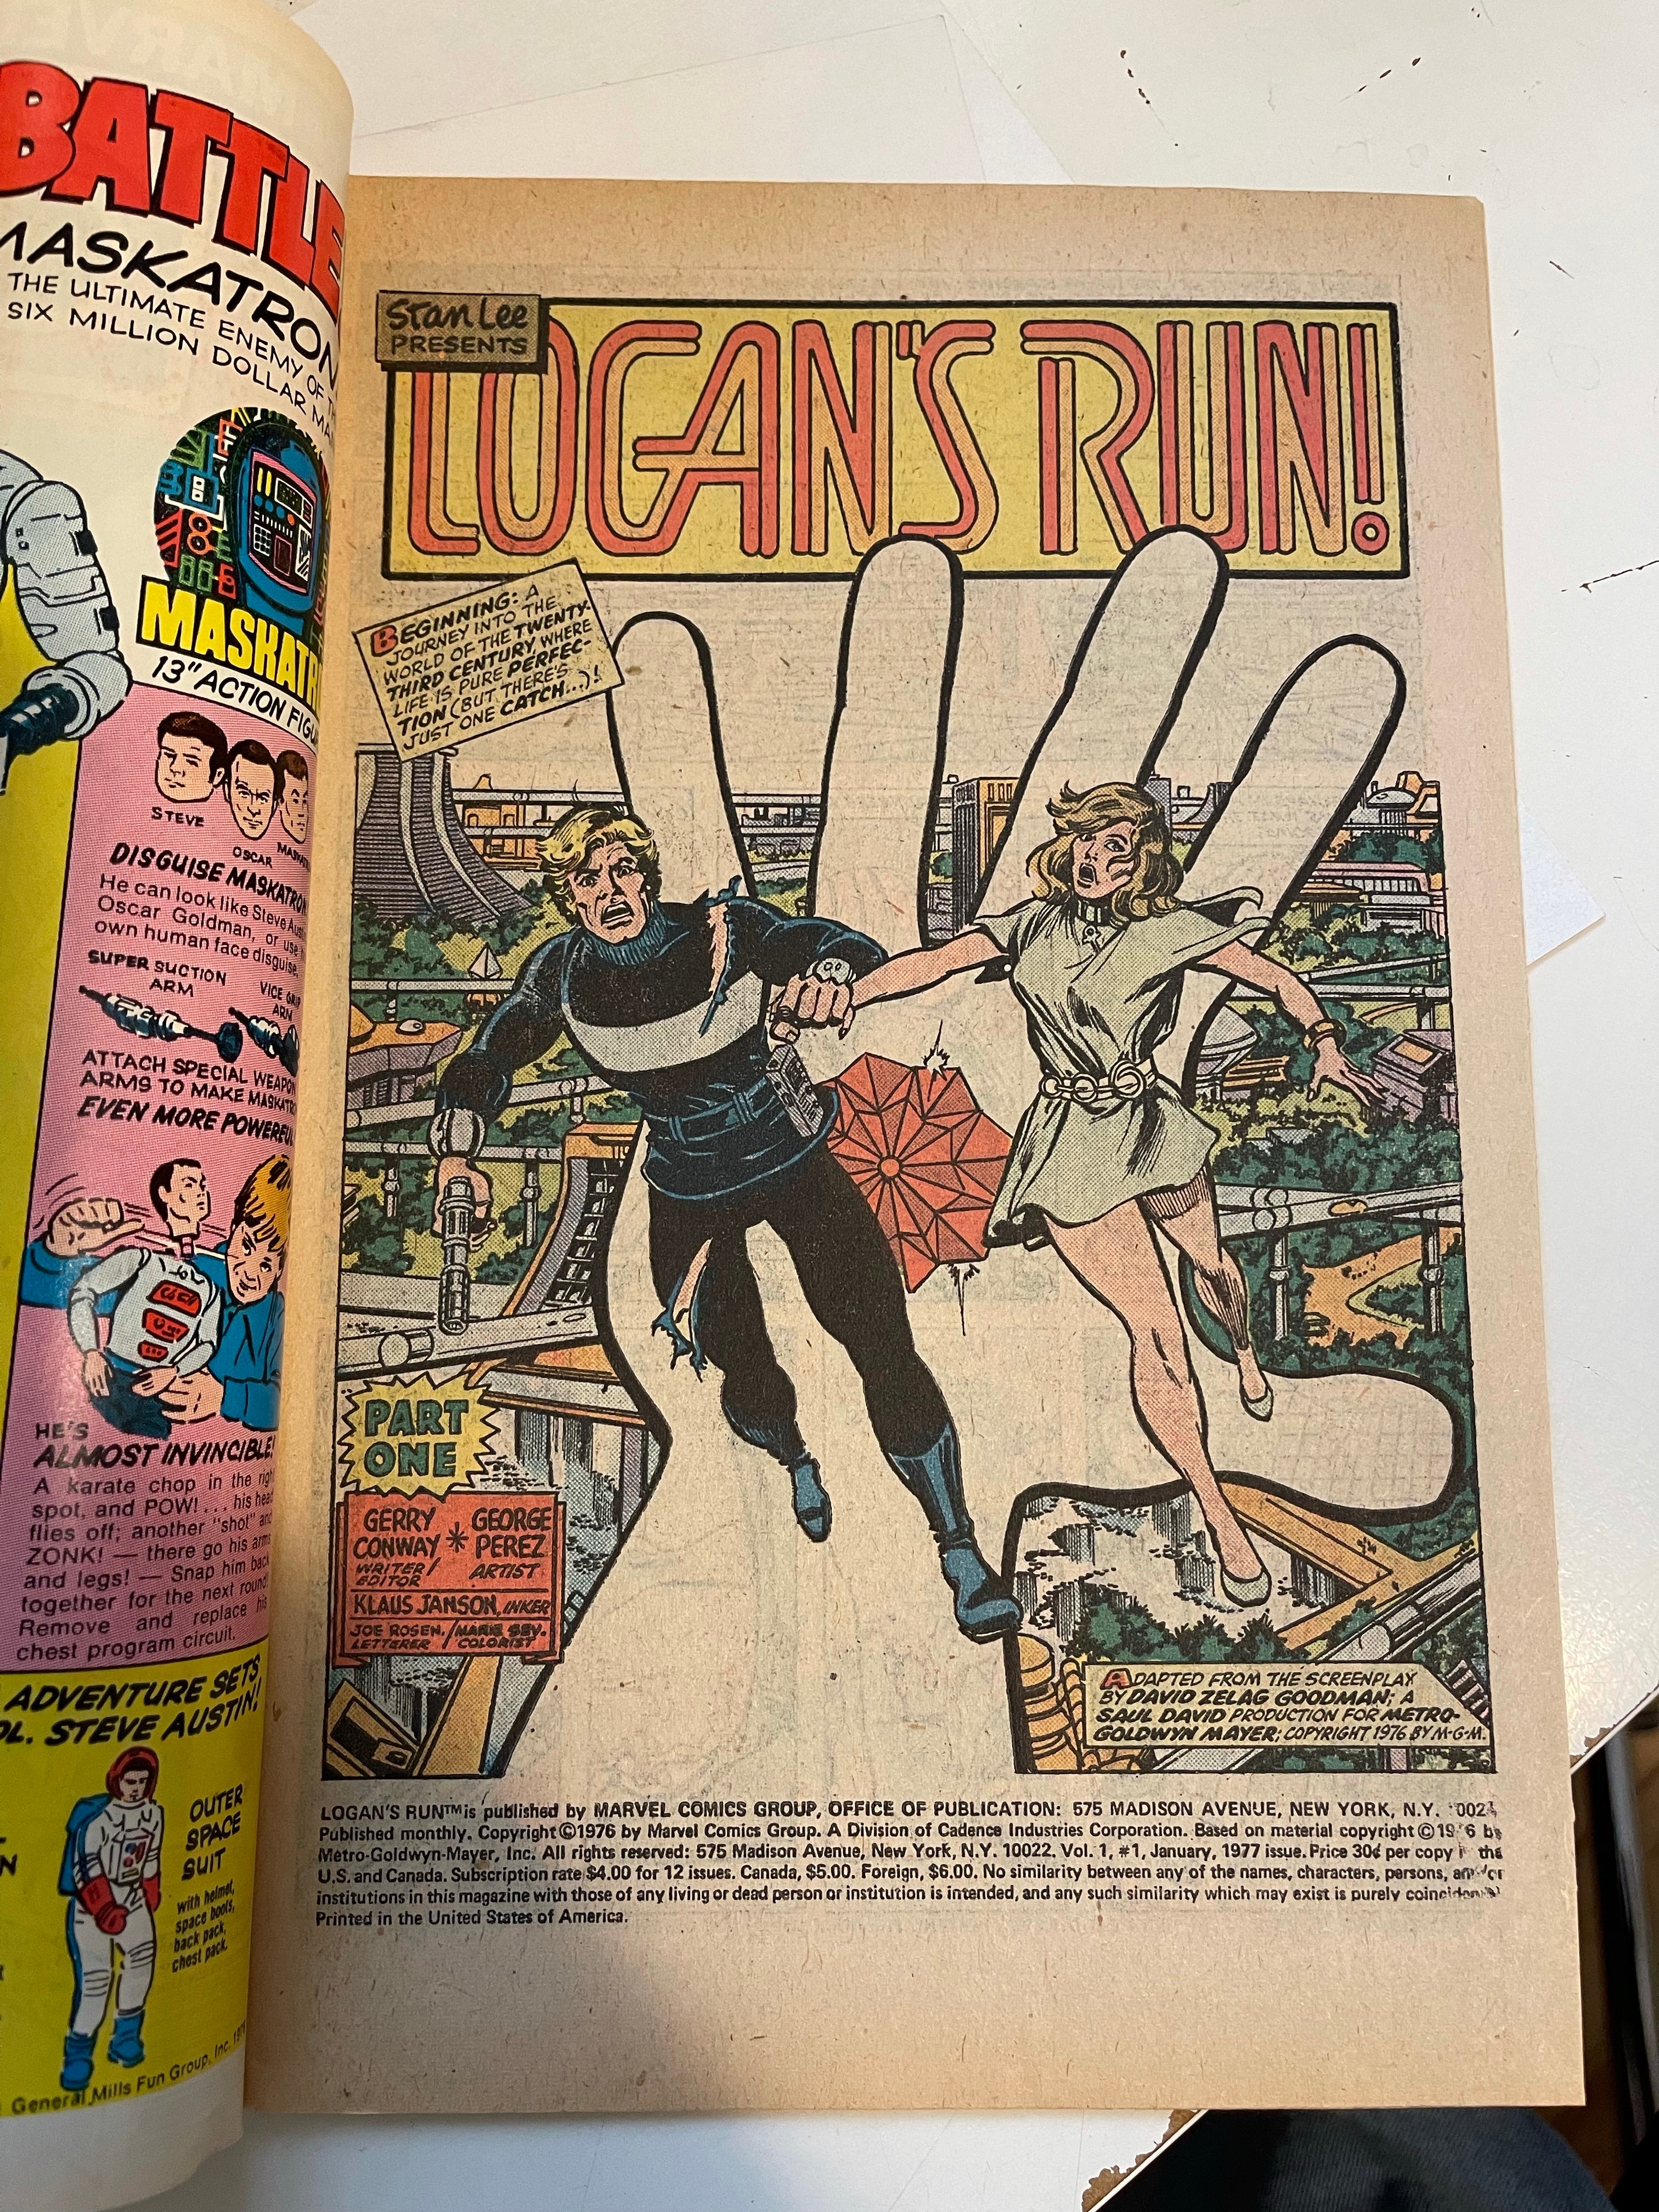 Logan’s Run #1 high grade comic book 1976